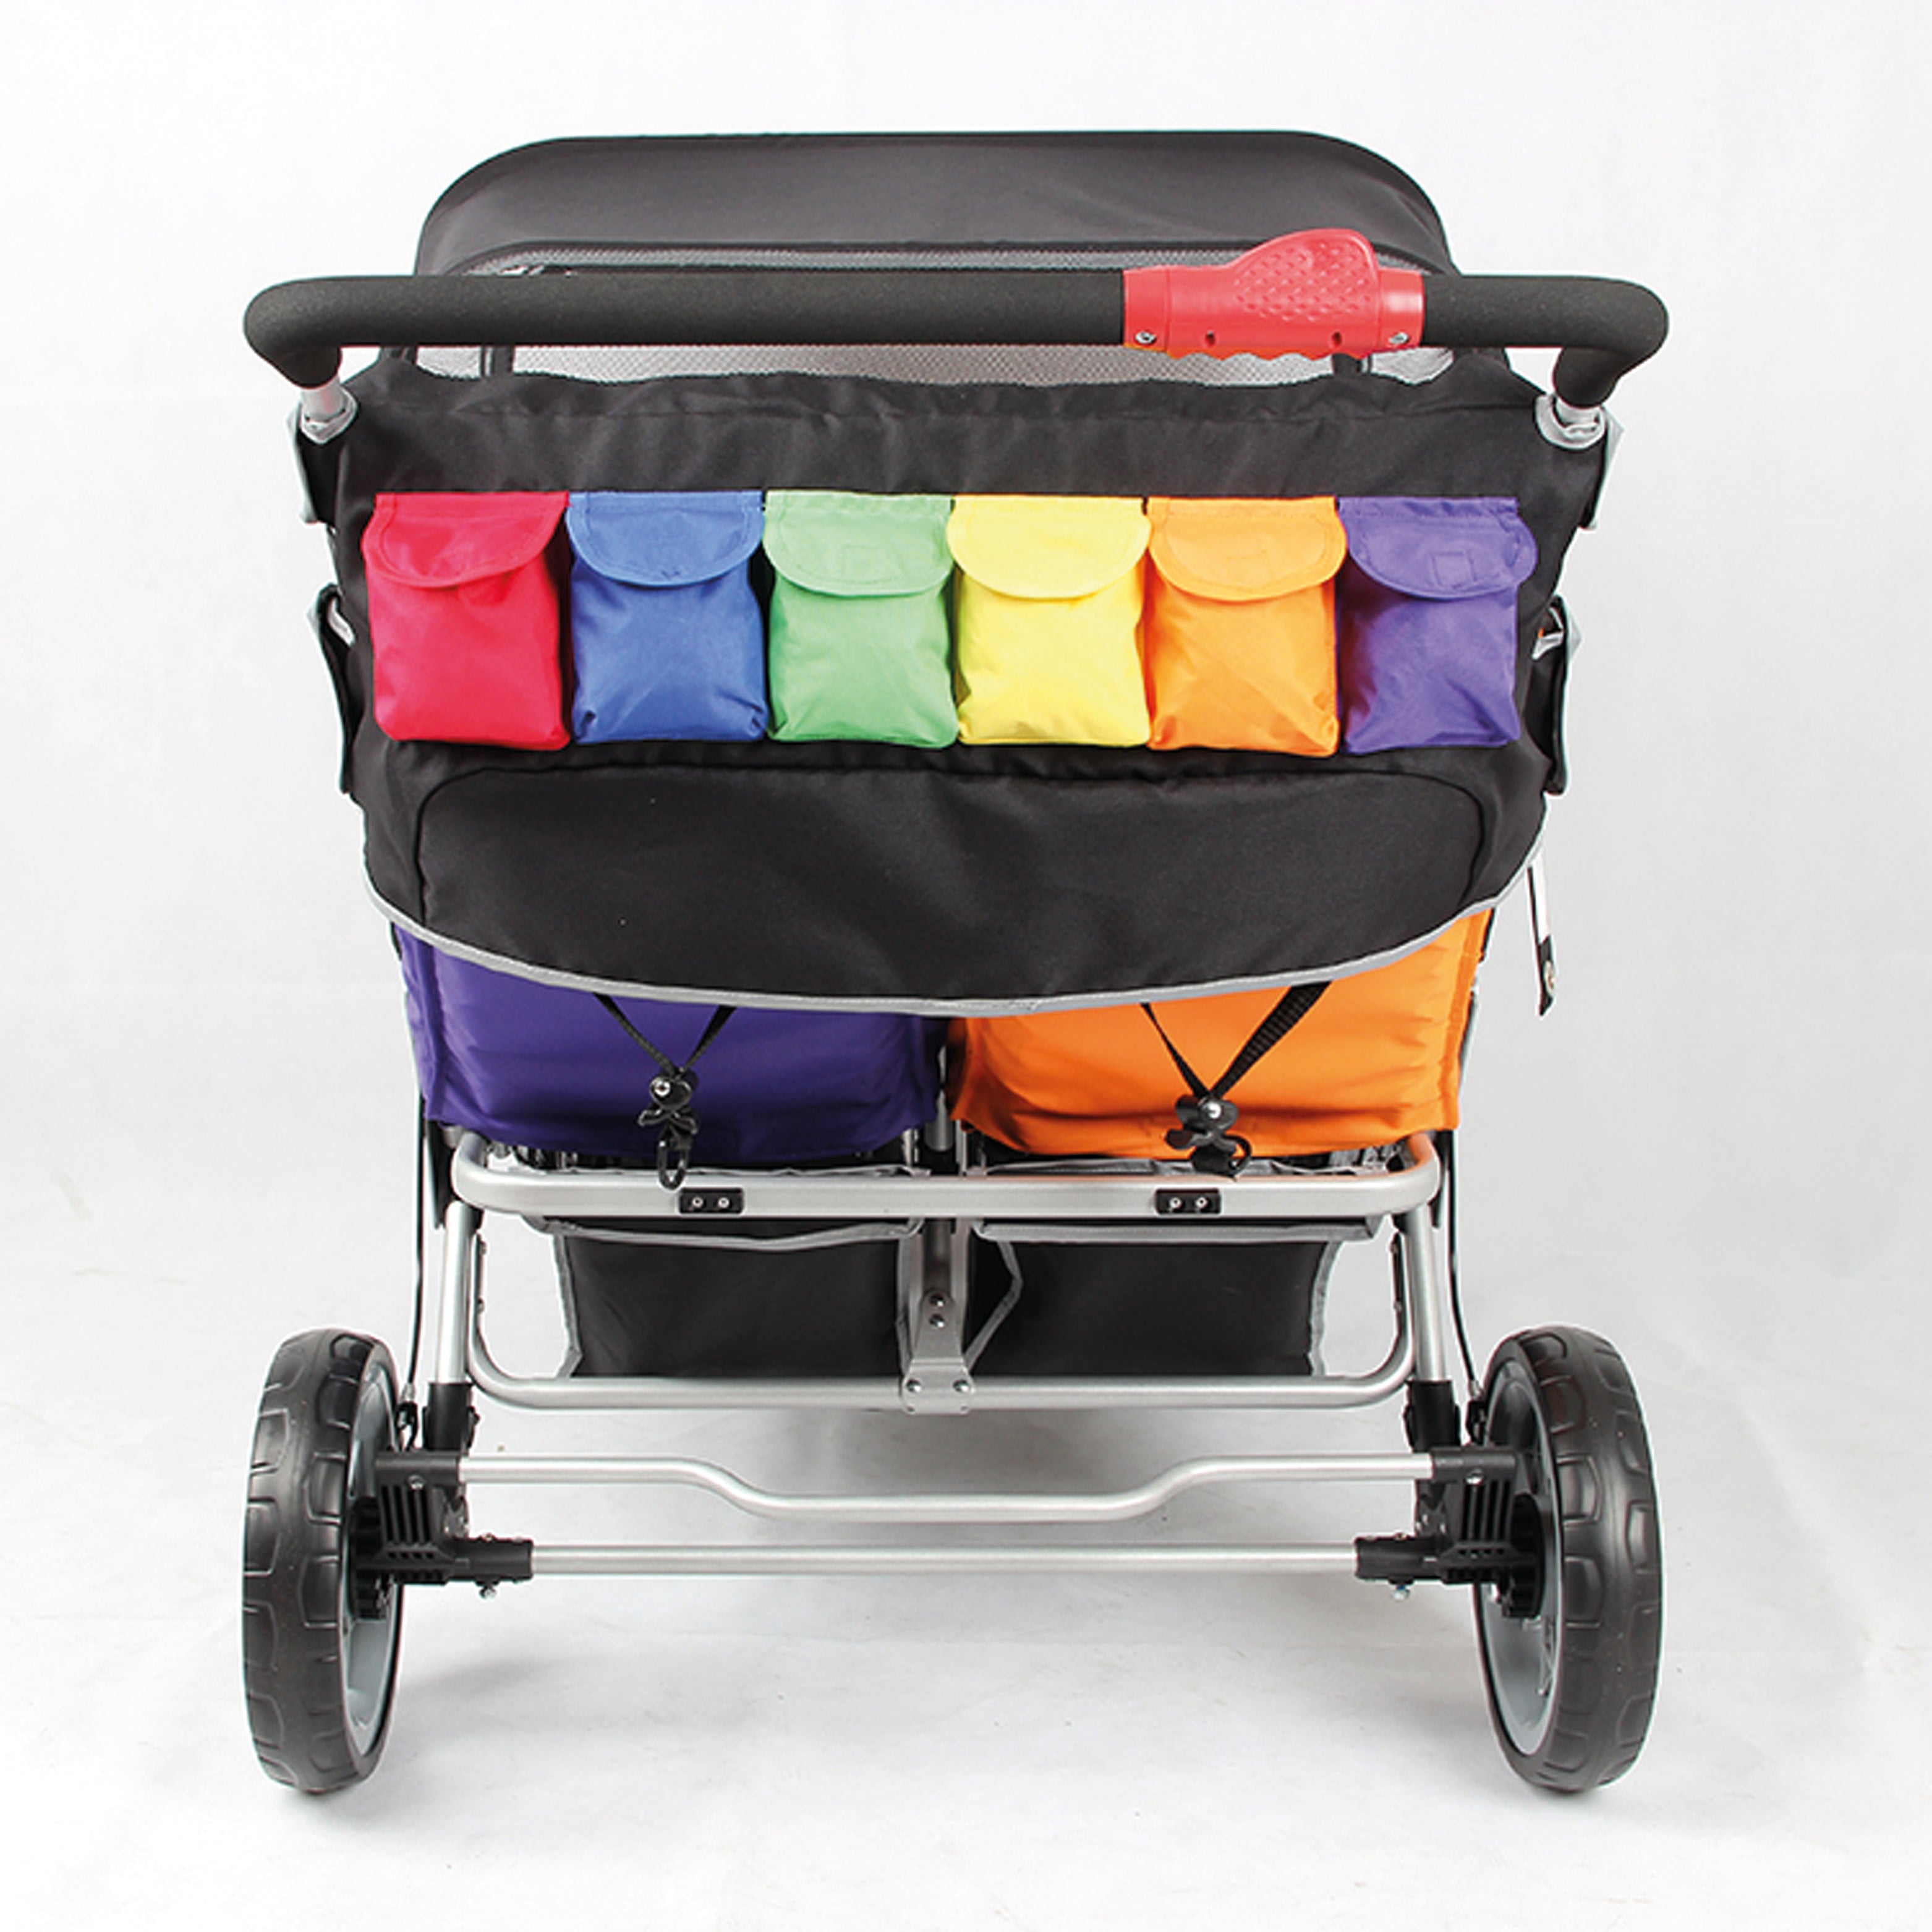 familidoo quad stroller wagon